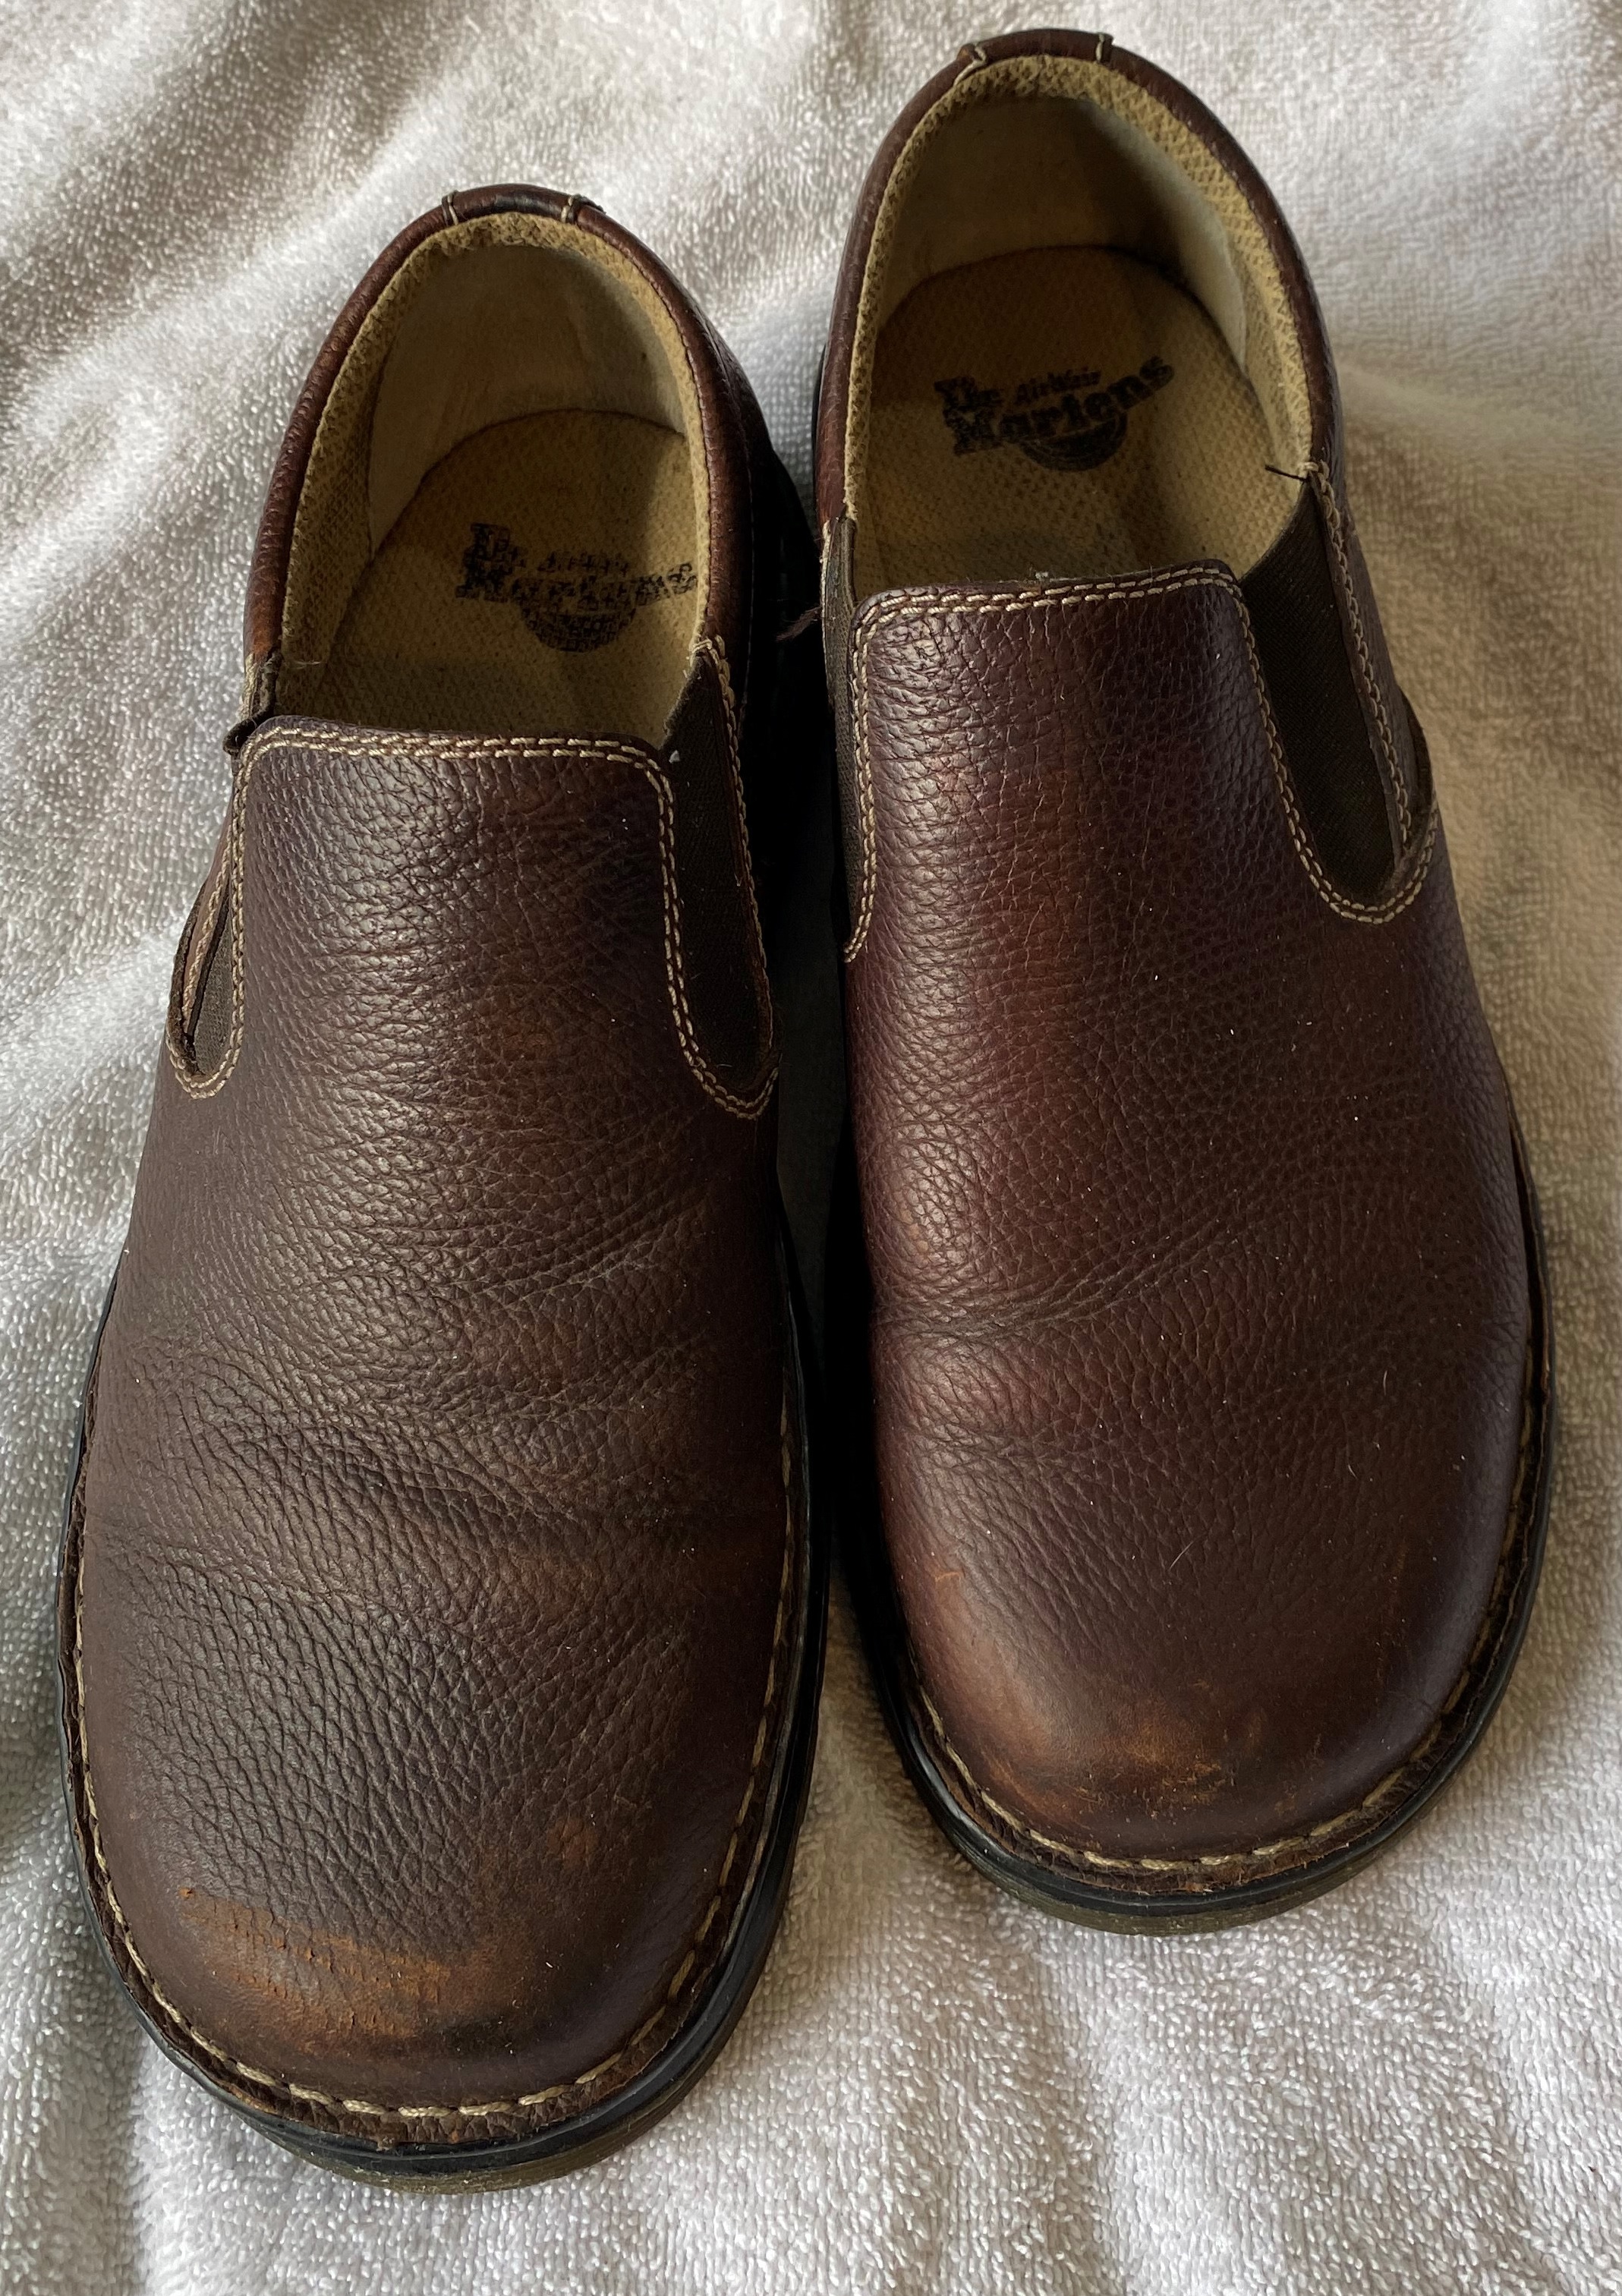 Dr Martens Summer Men's Leather Ankle Boots